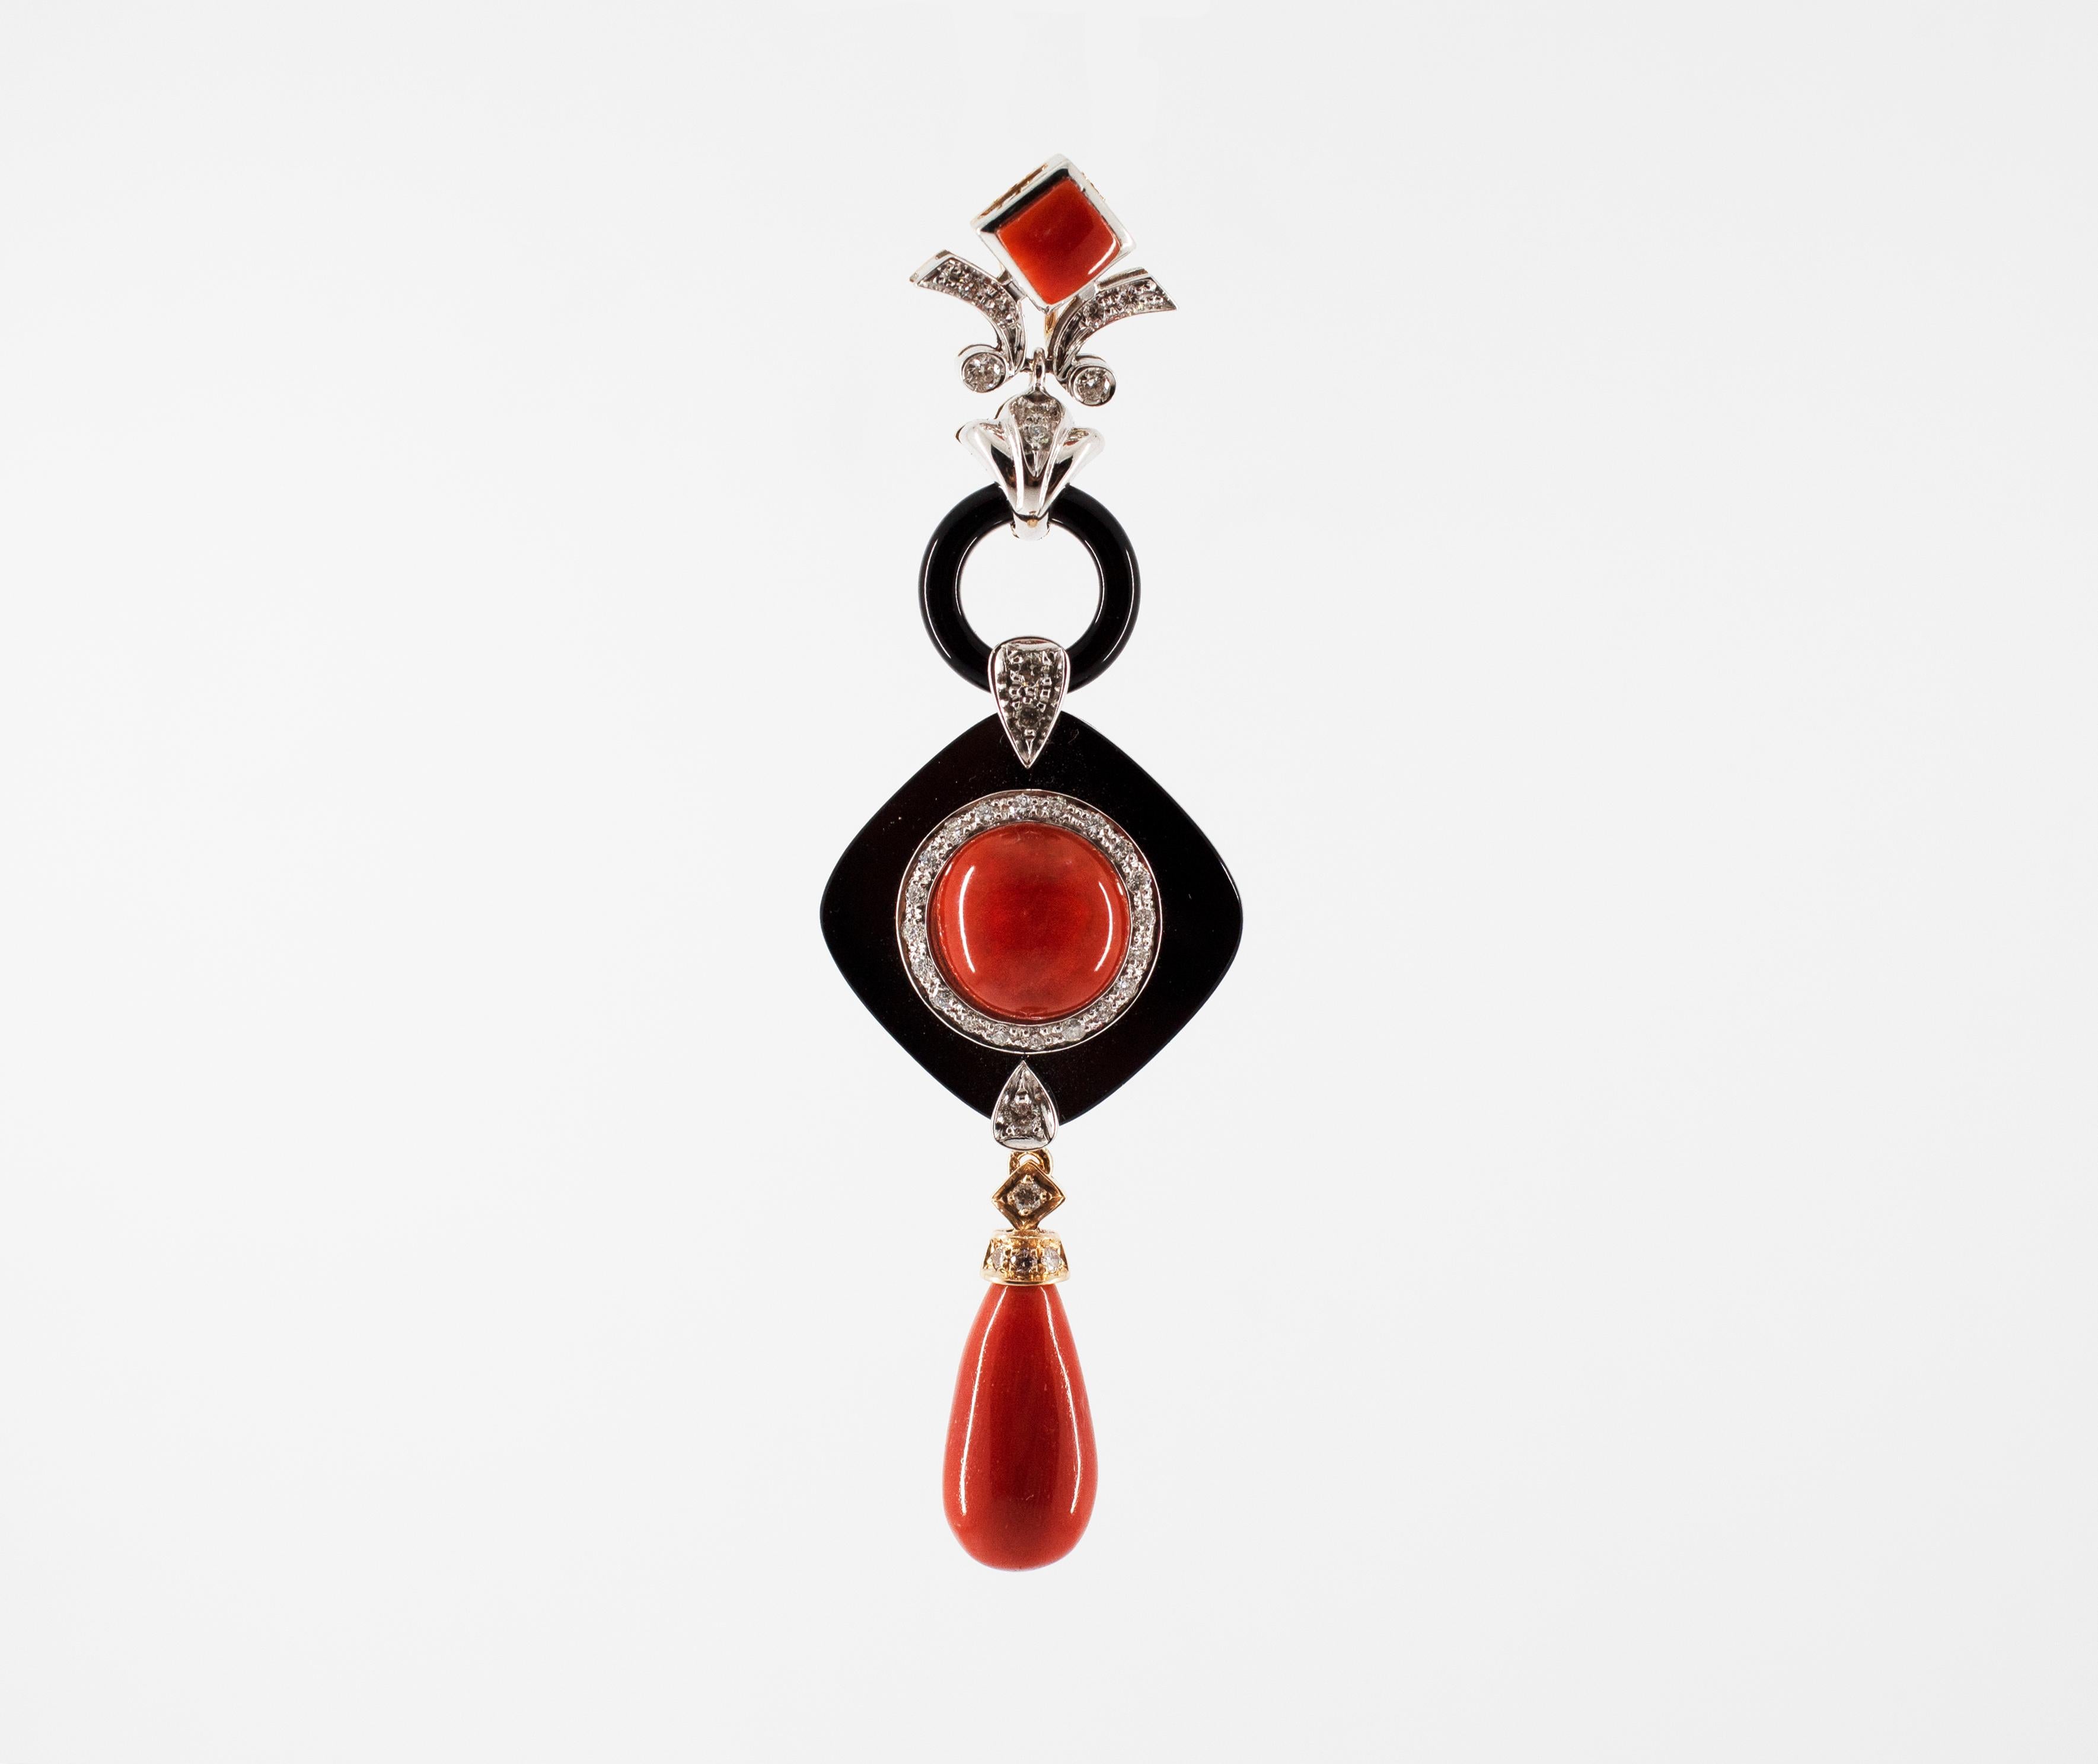 Brilliant Cut Art Deco Style Red Coral White Diamond Onyx White Gold Pendant Necklace